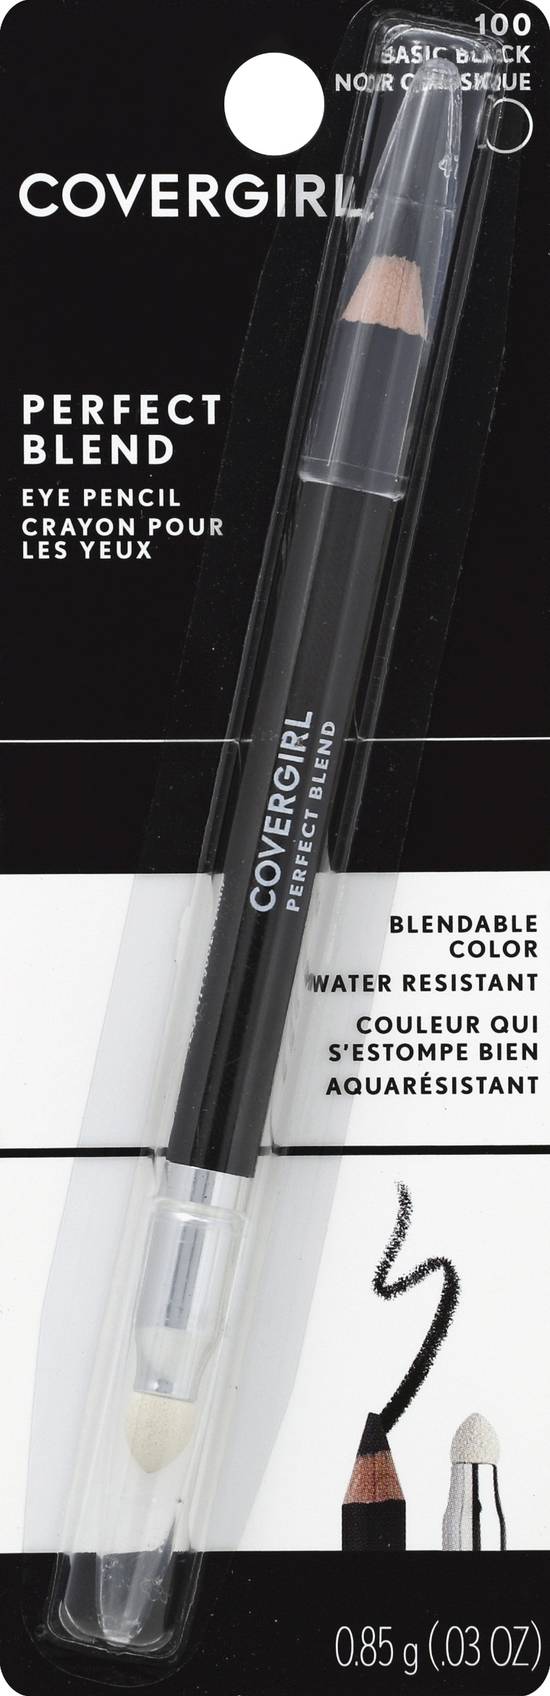 Covergirl 100 Basic Black Perfect Blend Eye Pencil